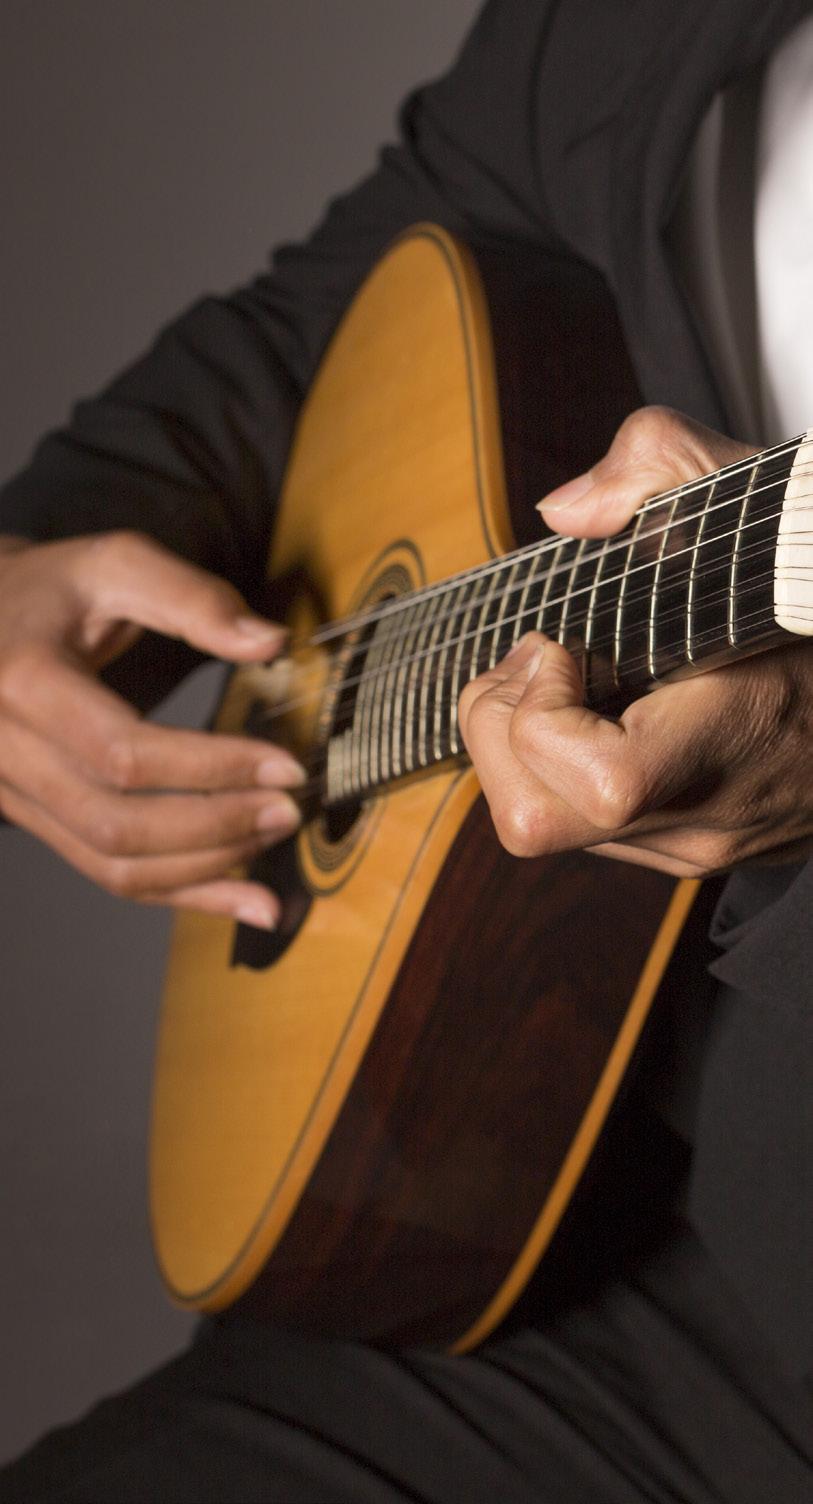 02 Music Fado is the traditional folk music popular in Lisbon.